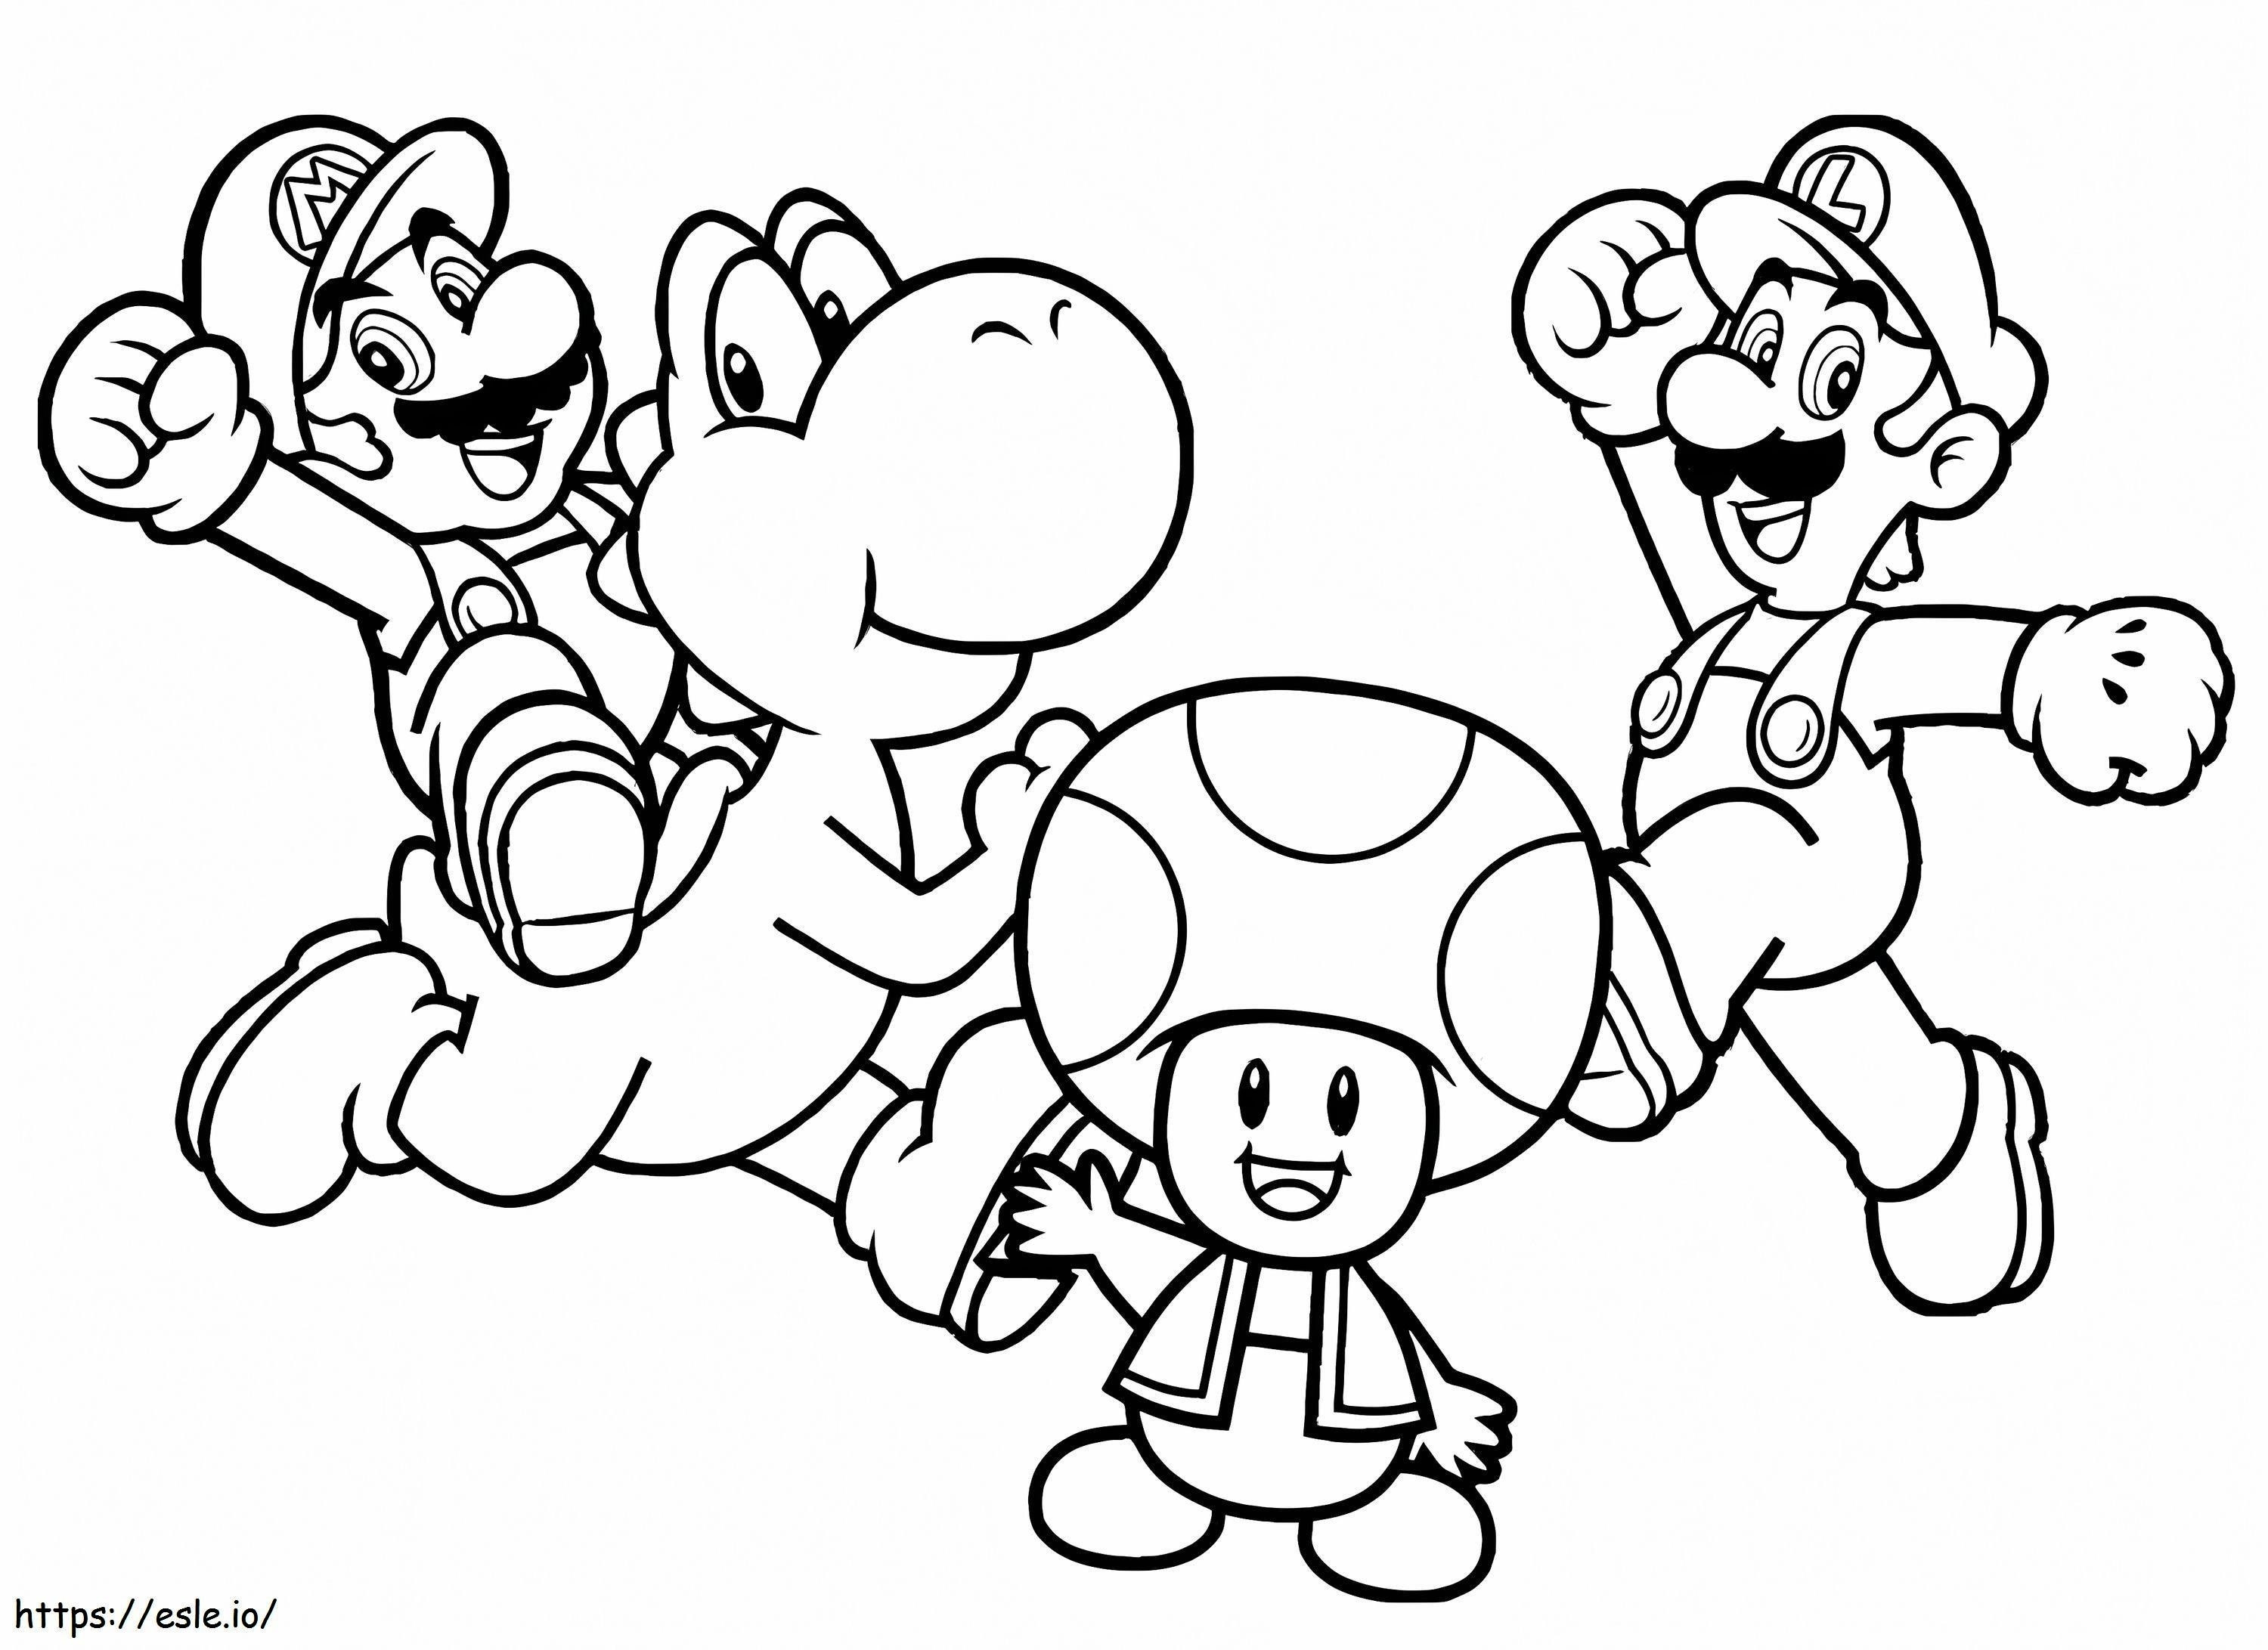 Mario karakterek kifestő